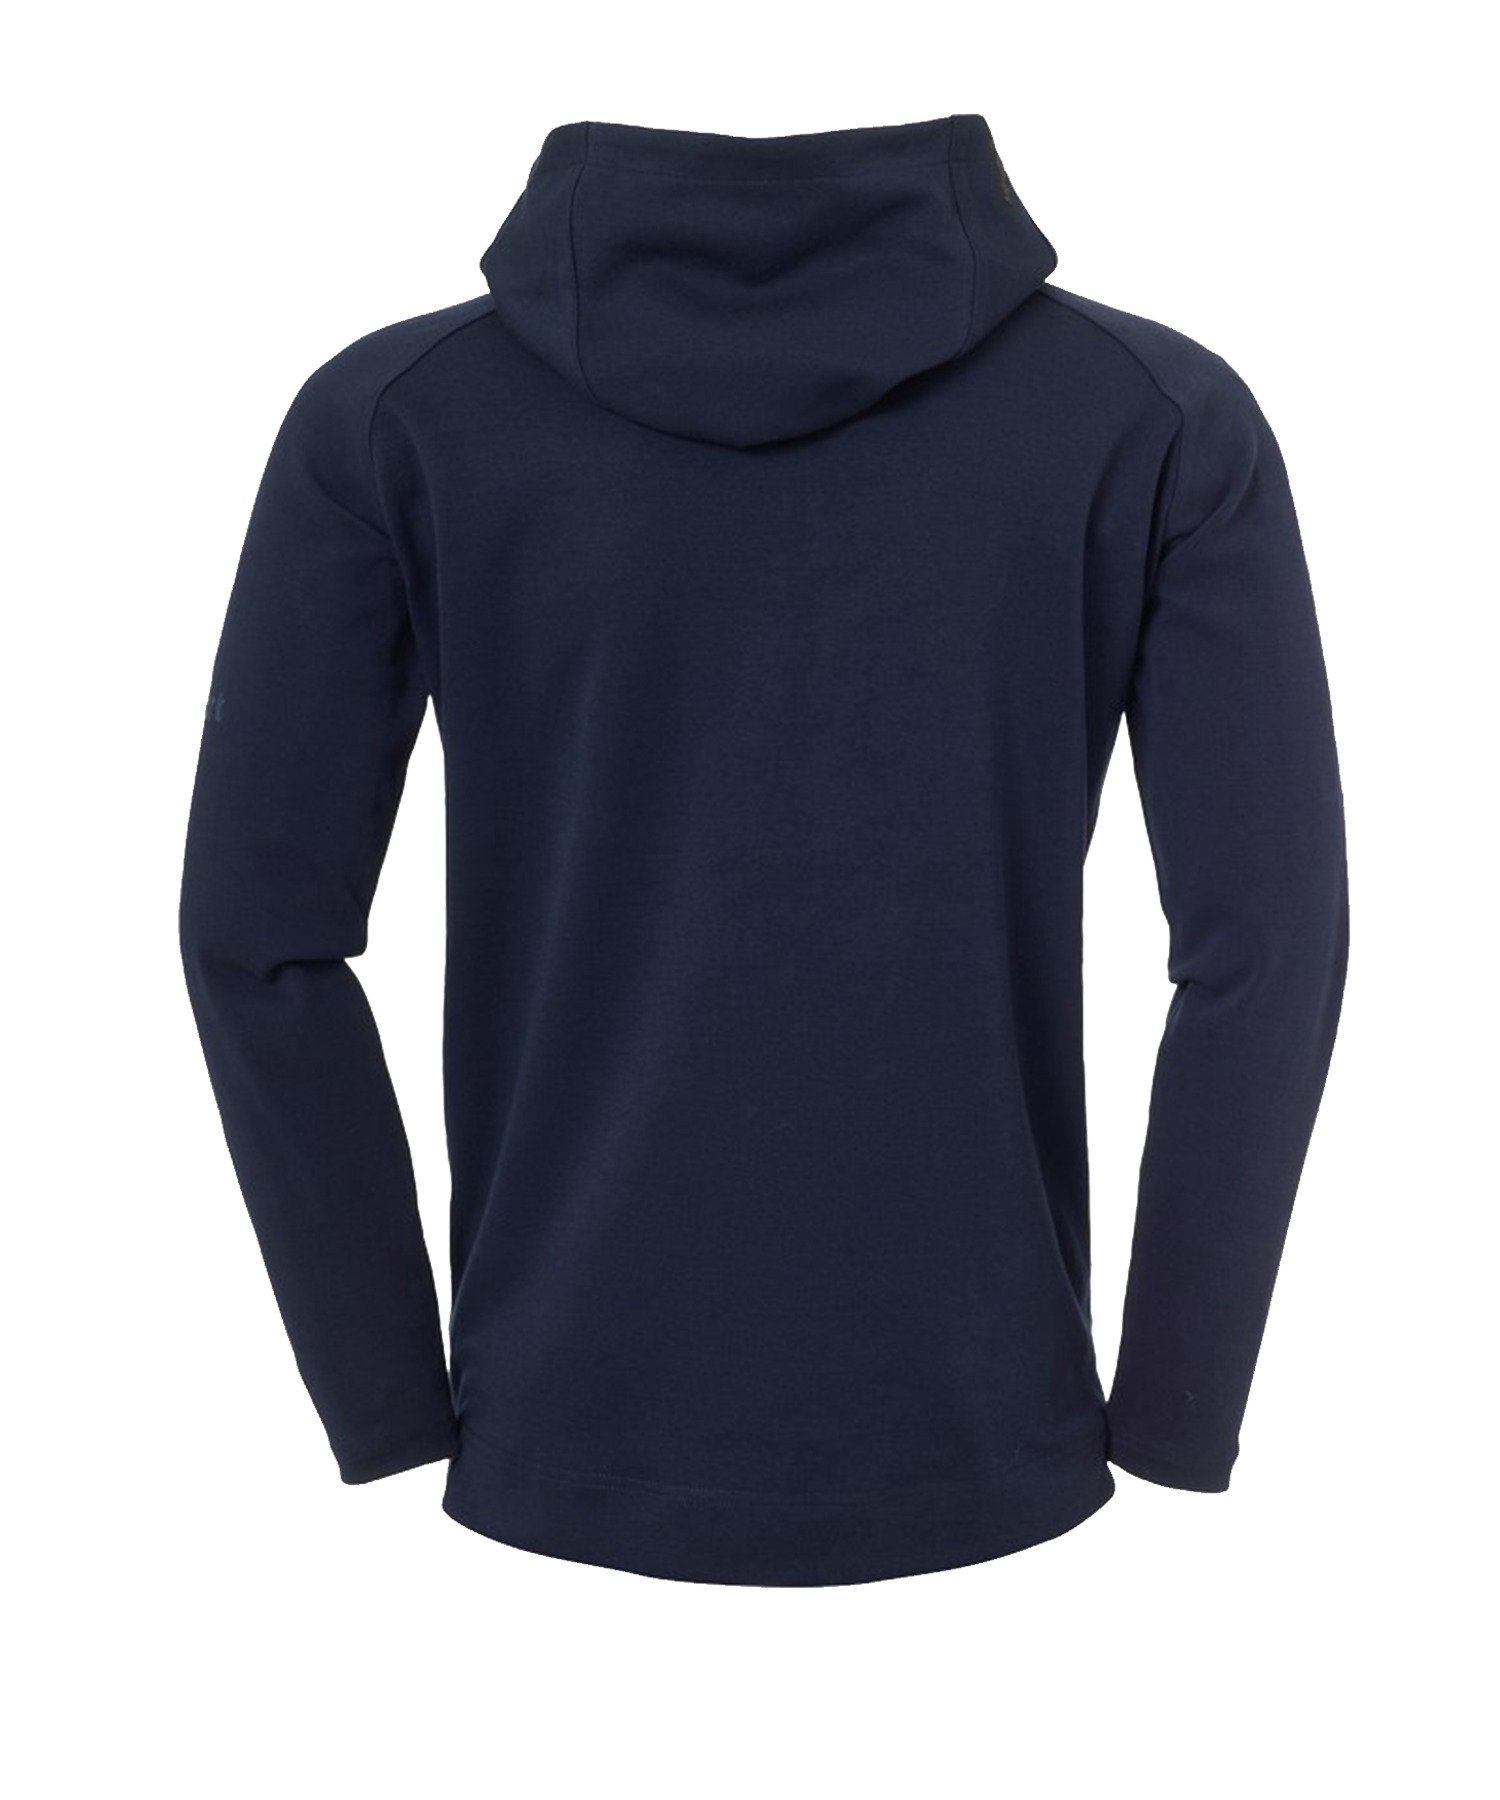 Pro Essential Blau Sweatshirt uhlsport Ziptop